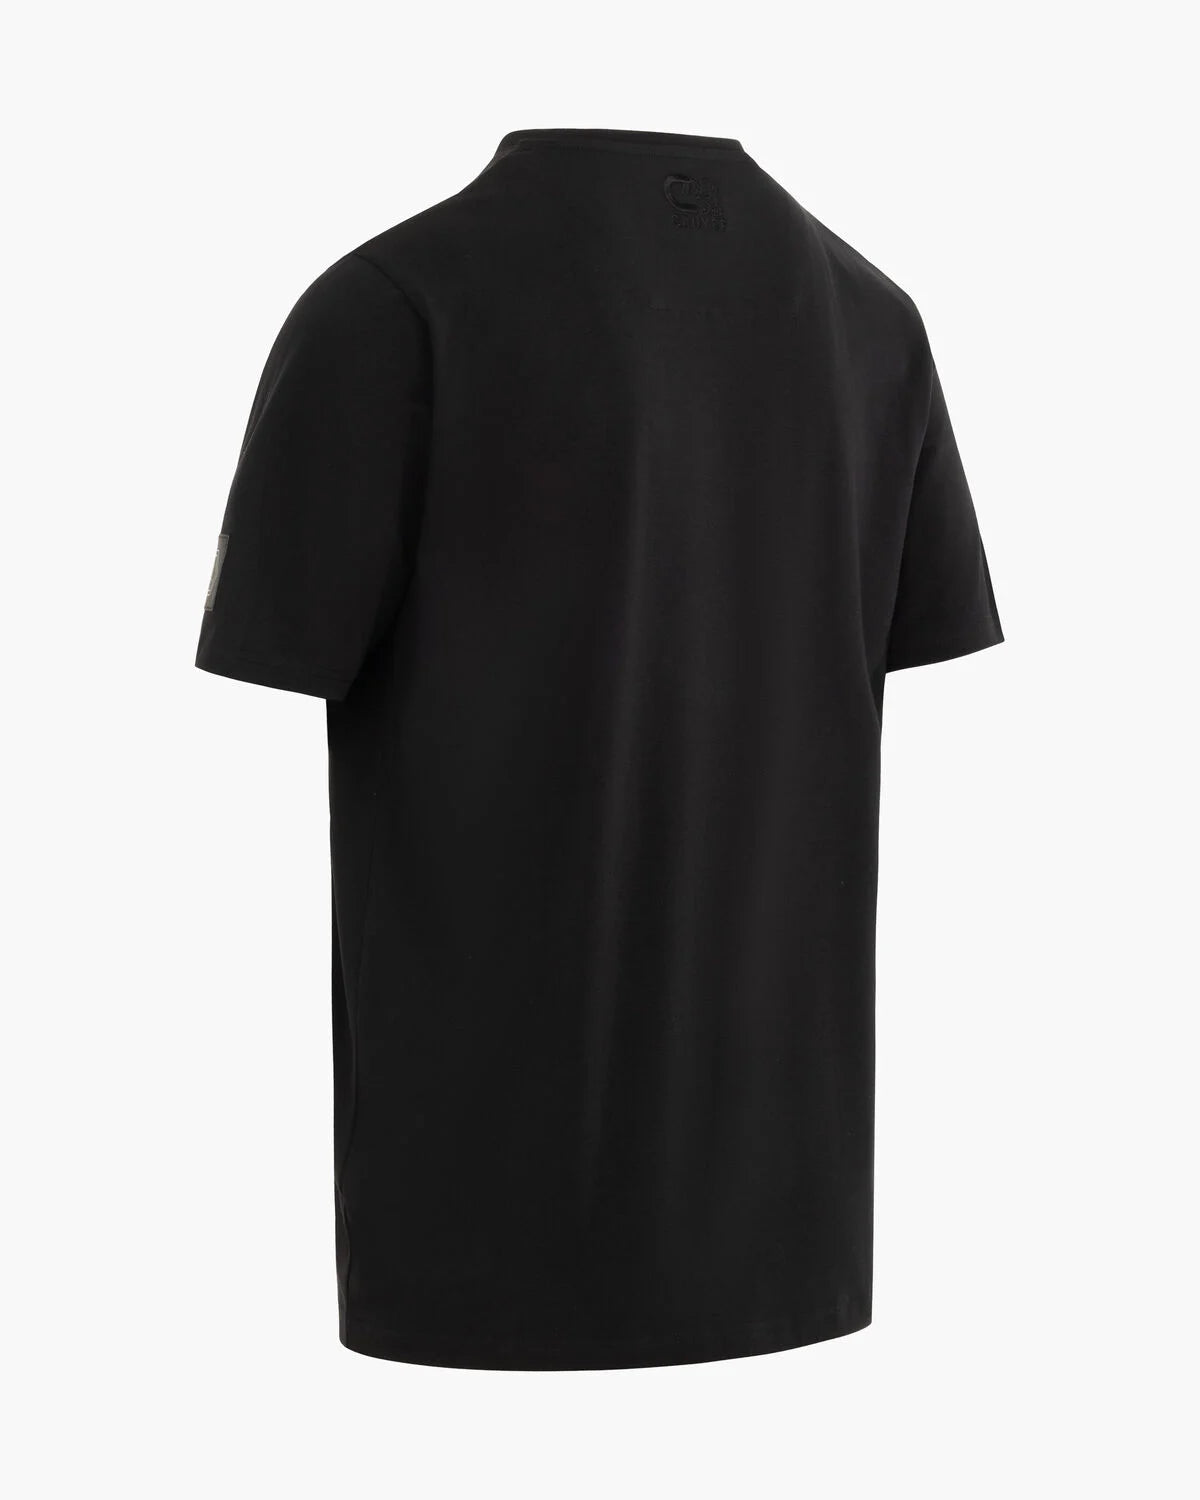 Cruyff Tiva T-Shirt Black